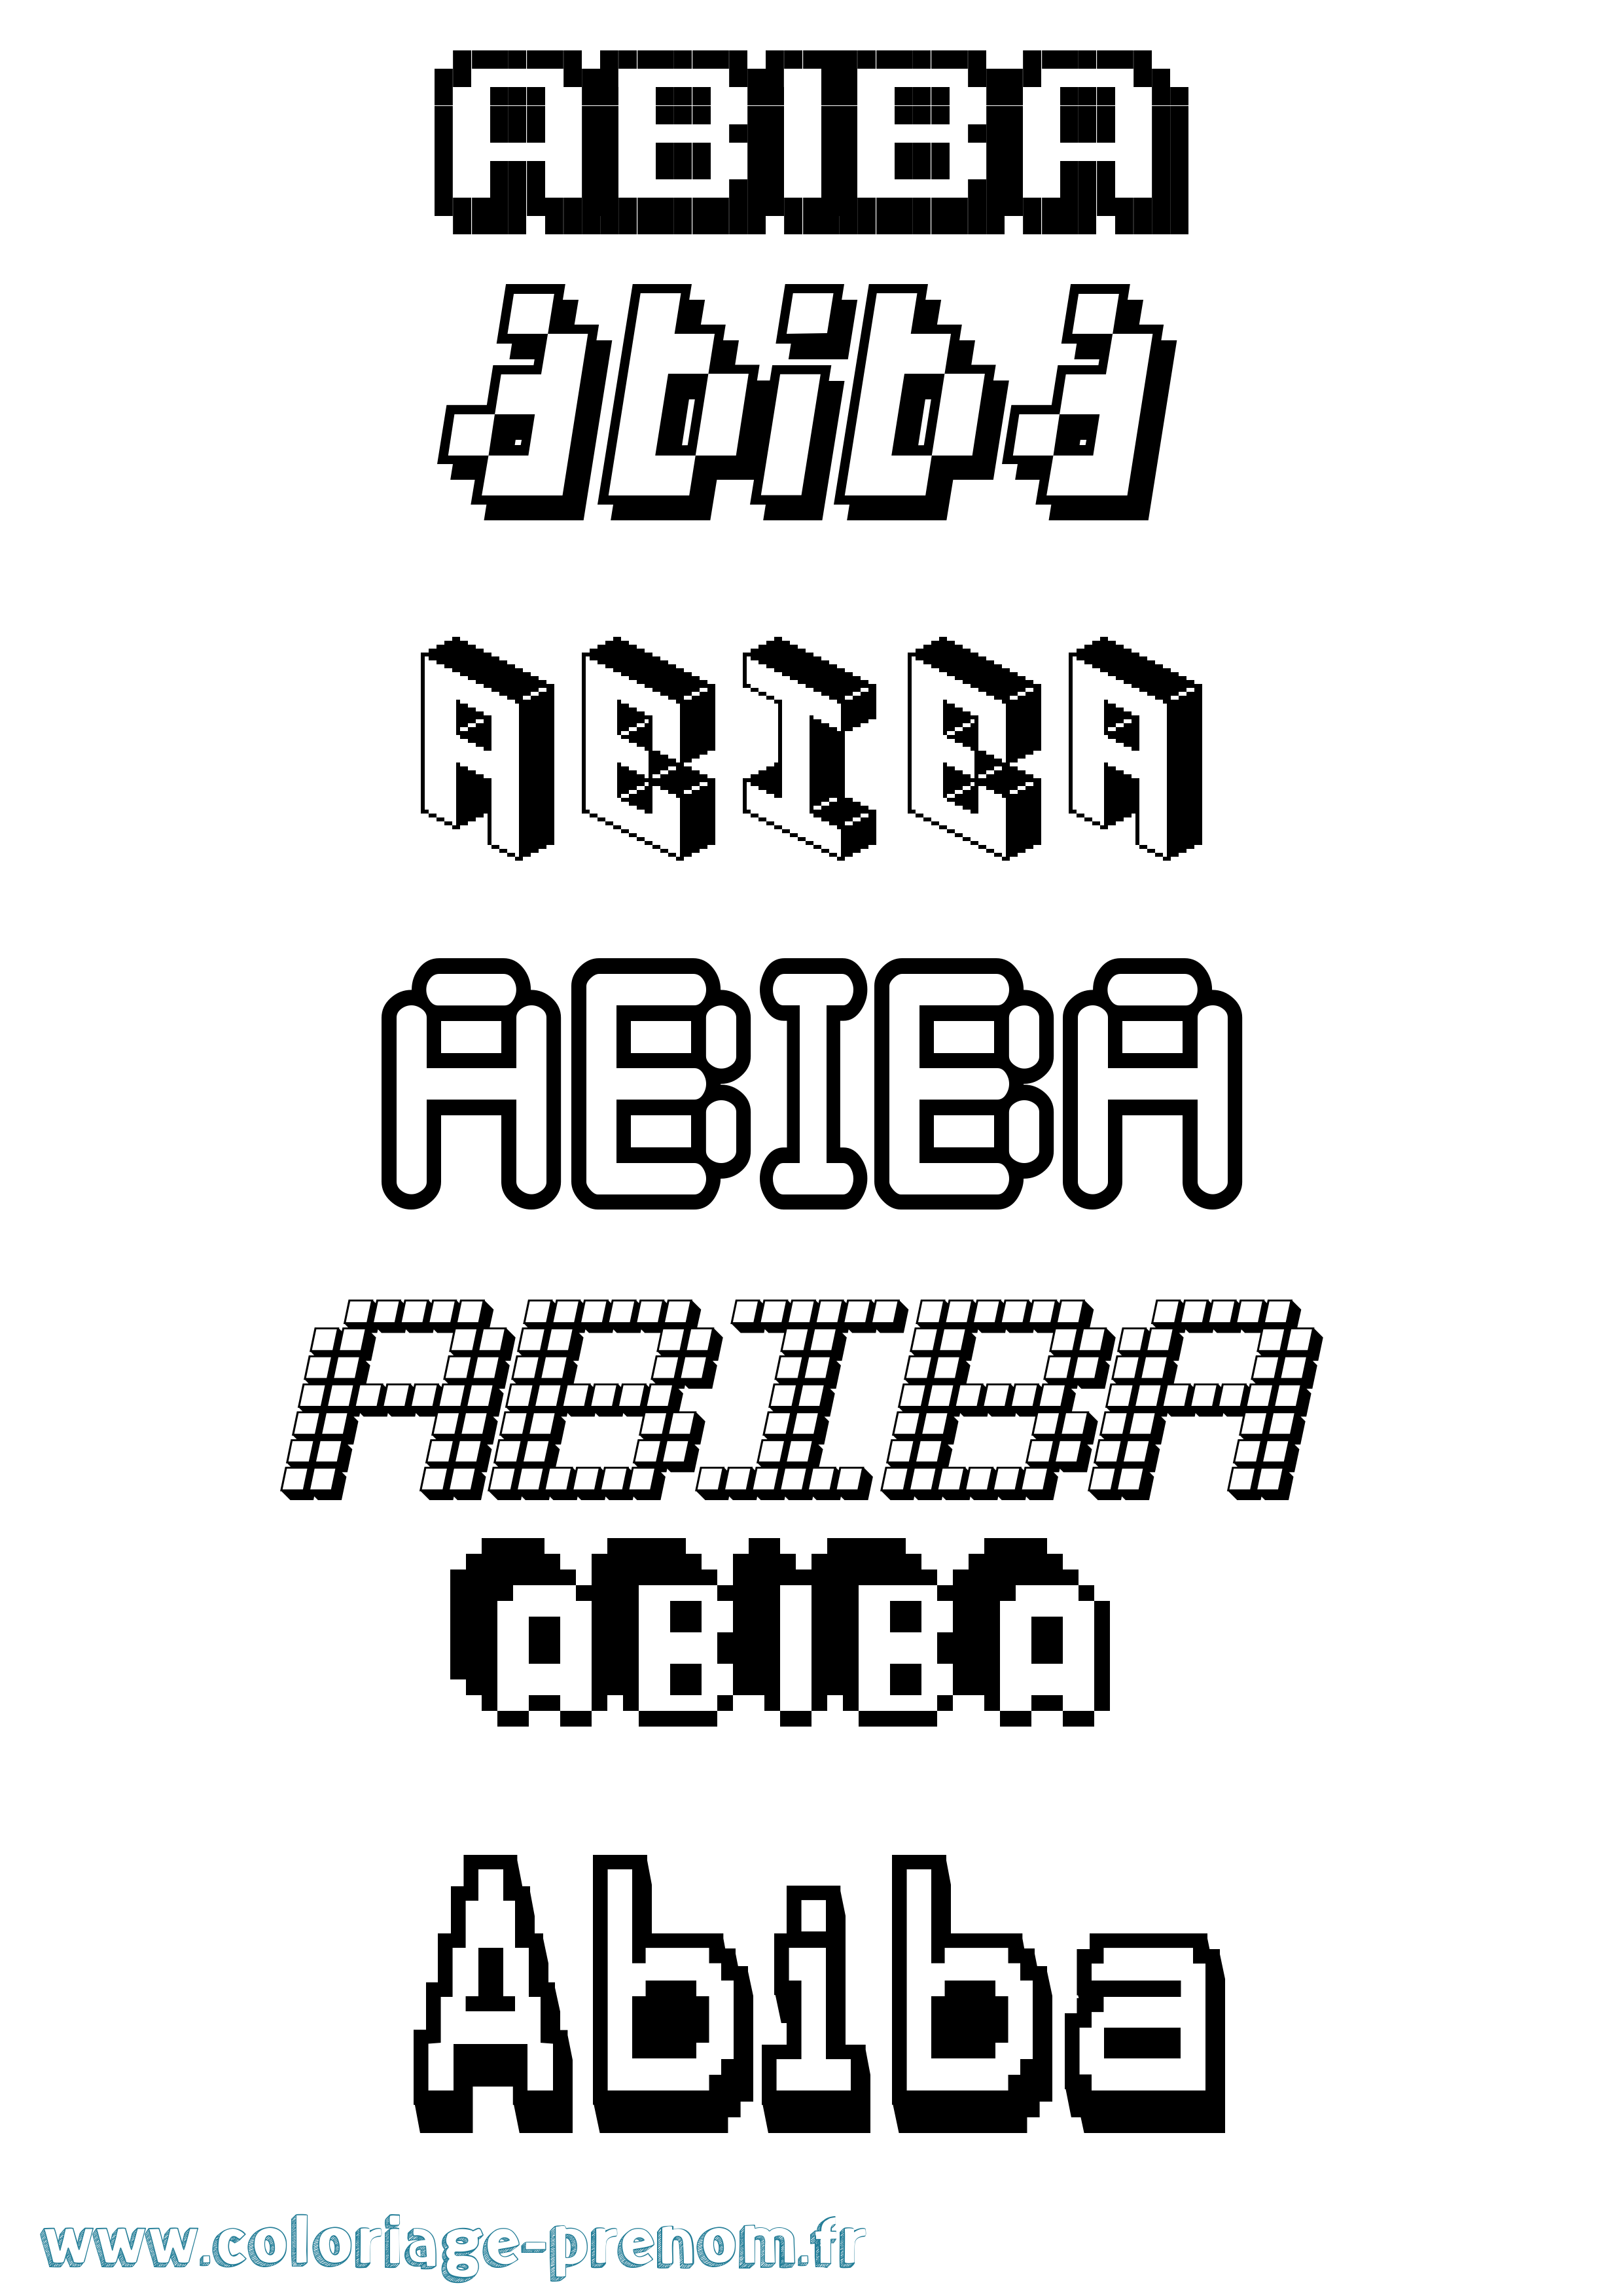 Coloriage prénom Abiba Pixel